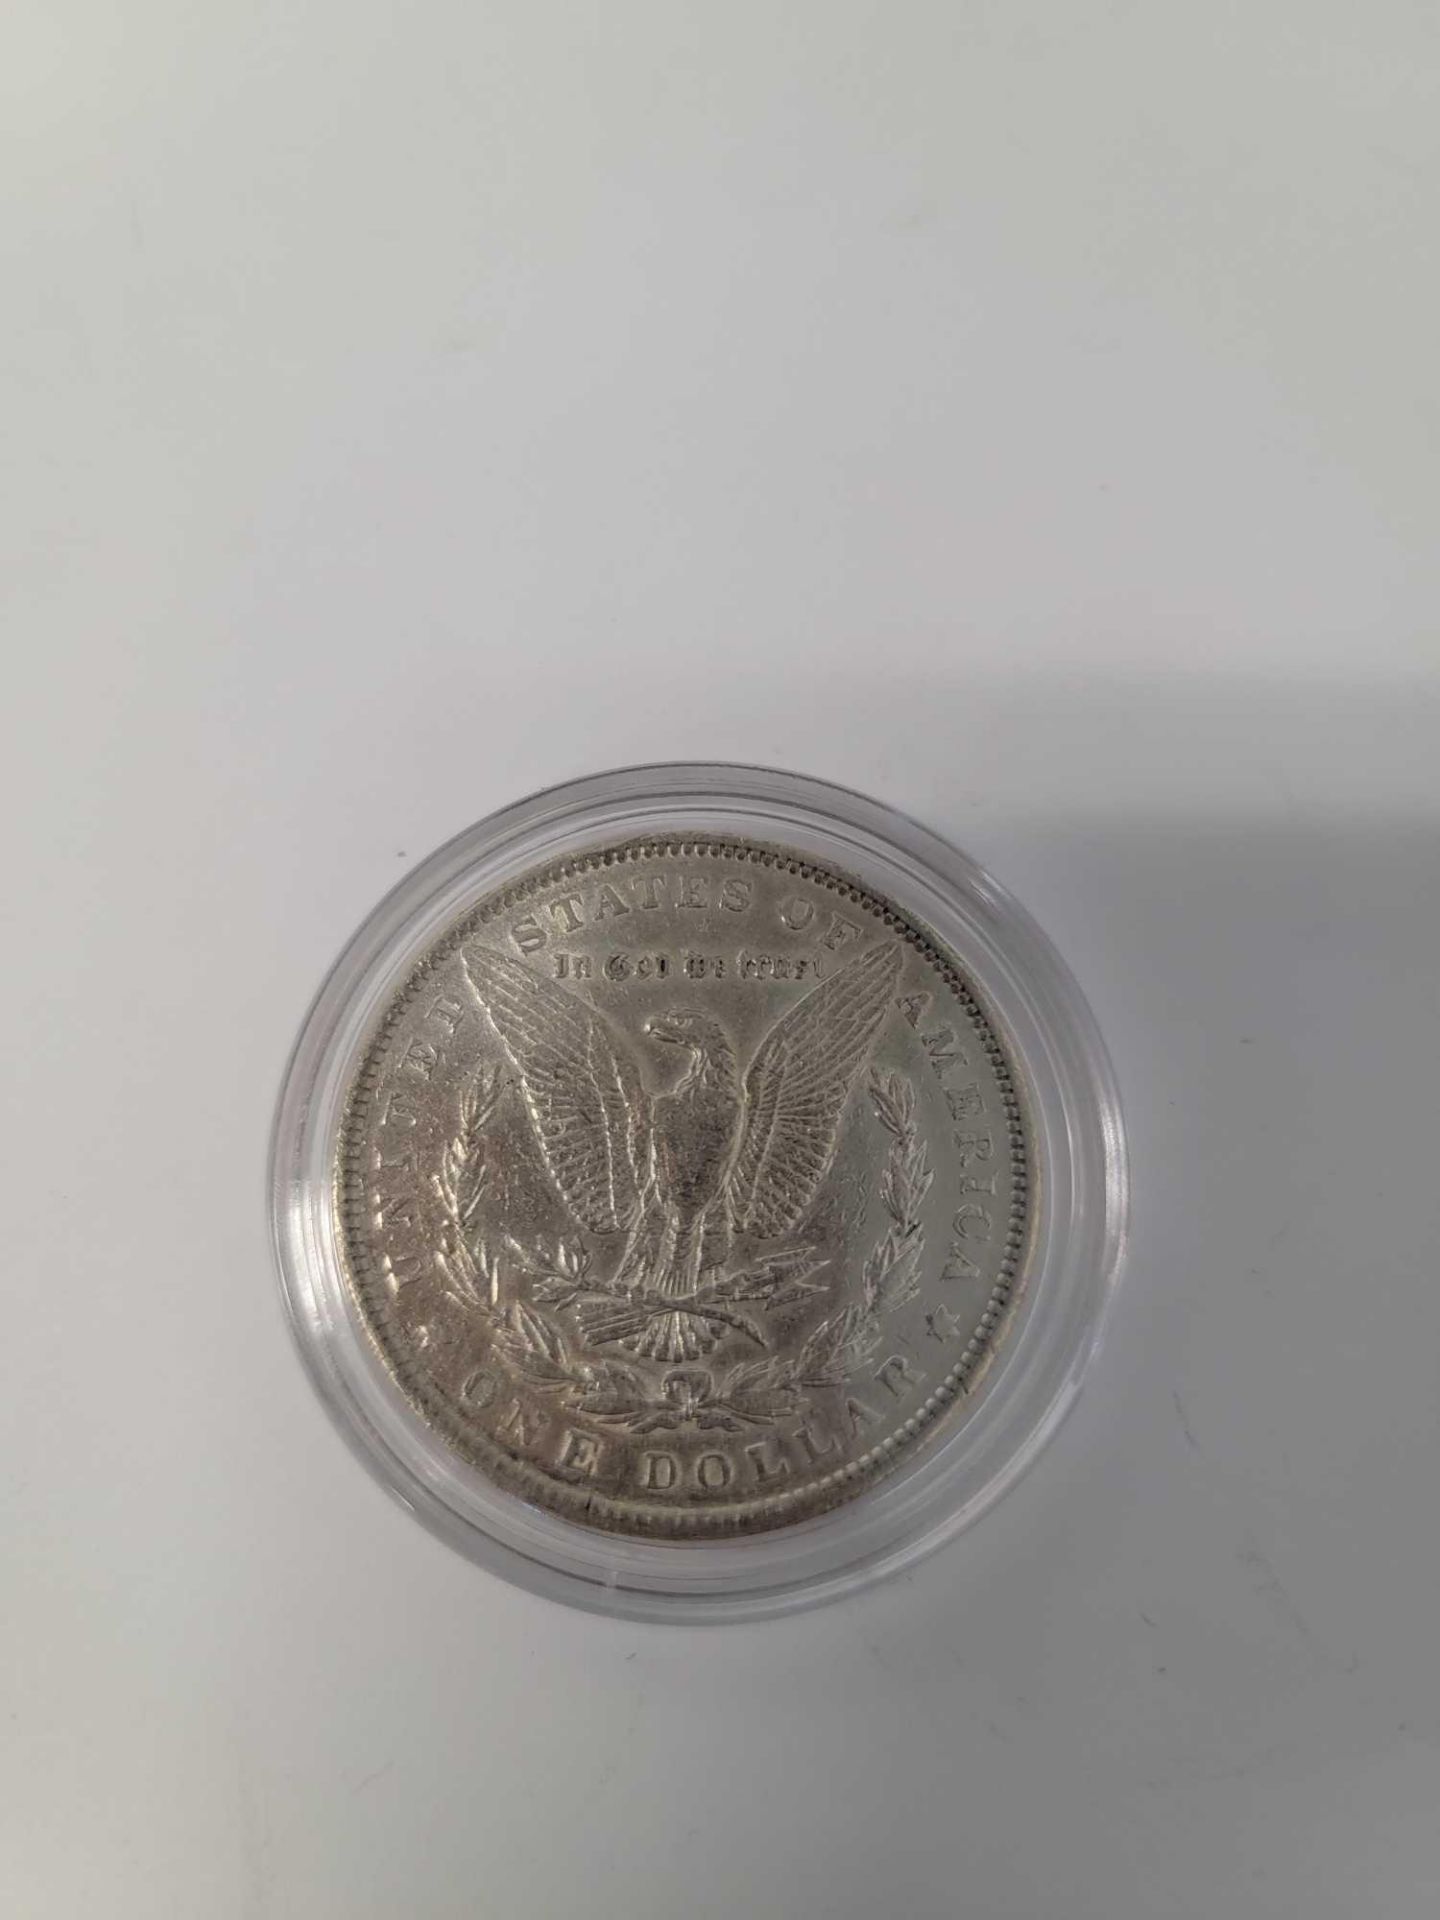 2 1890 Morgan Dollars - Image 4 of 4